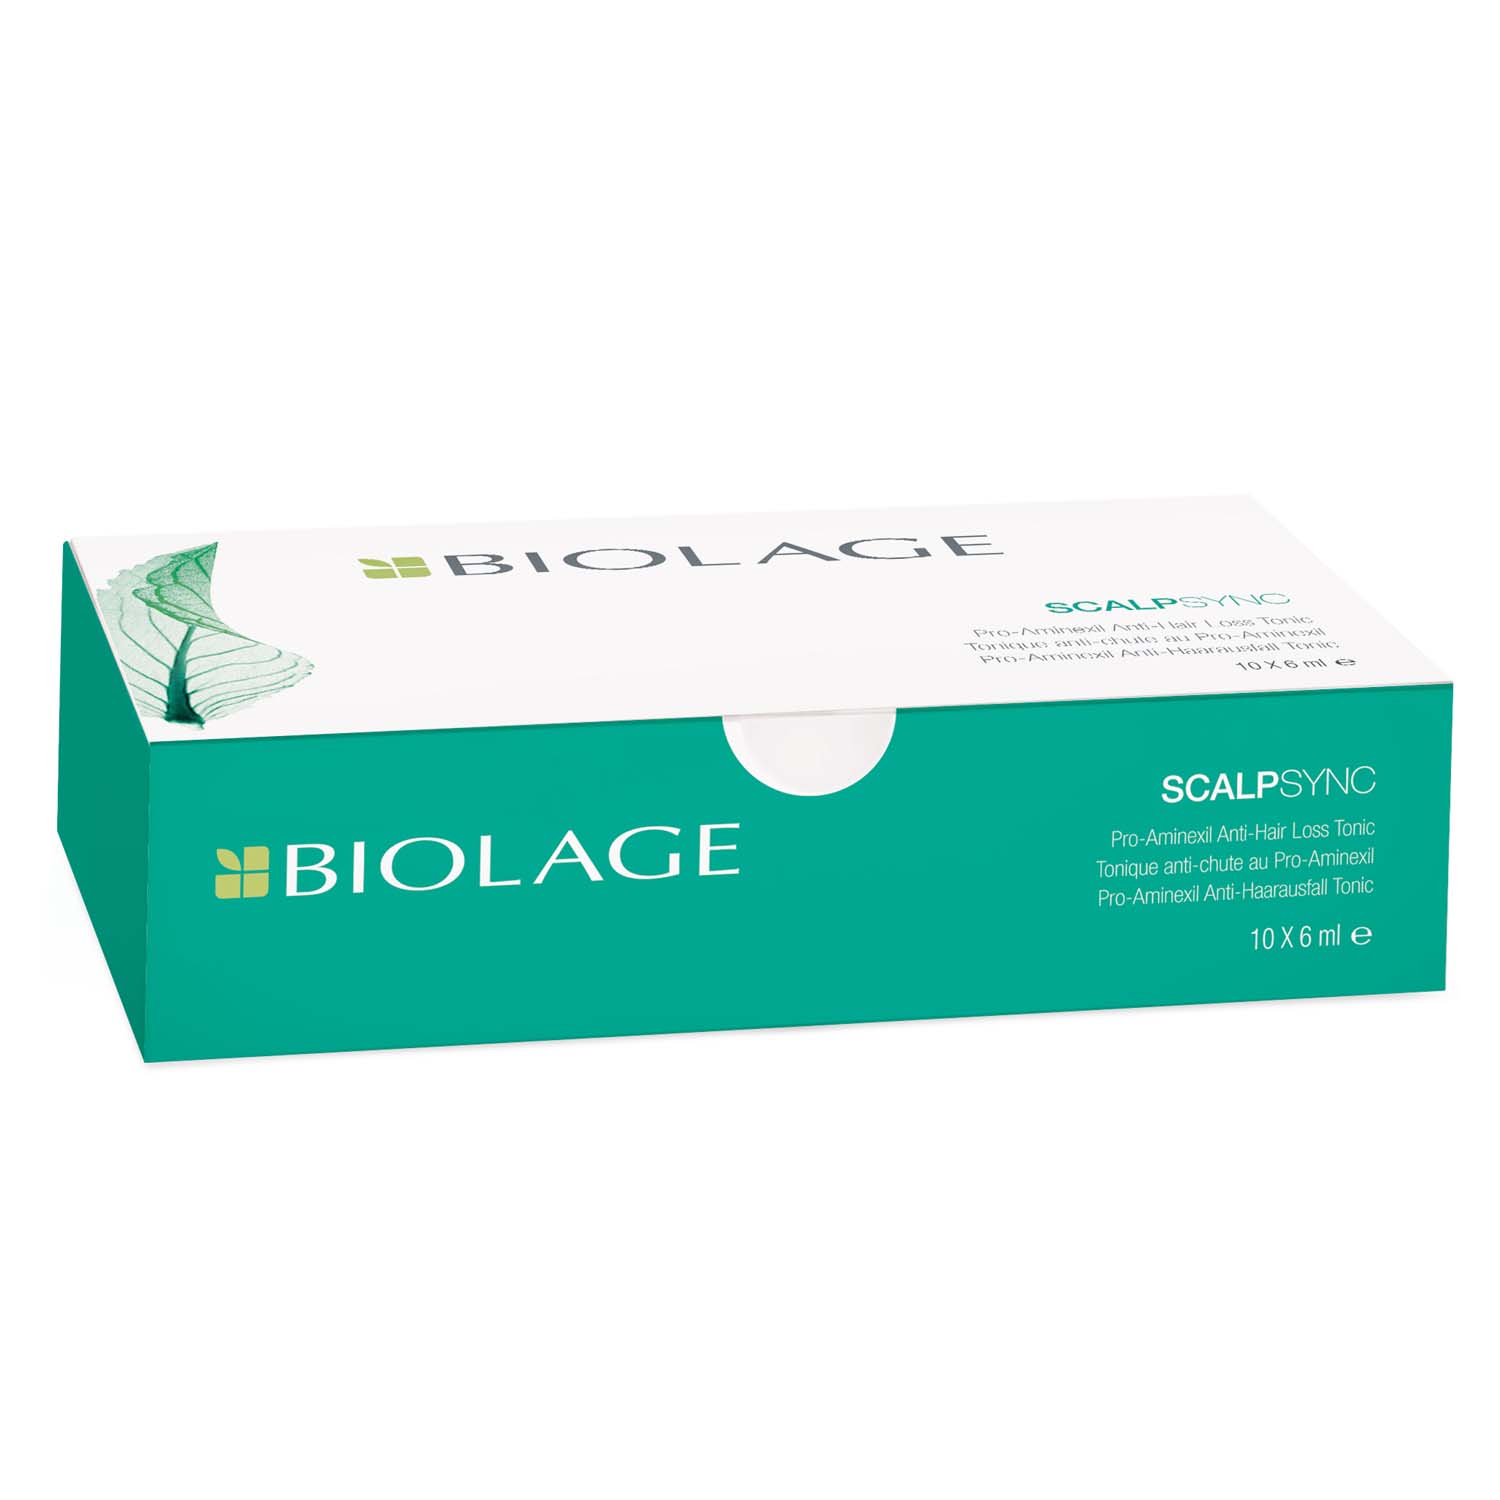 Biolage Scalptherapie Anti hair loss Tonic, 10x6ml